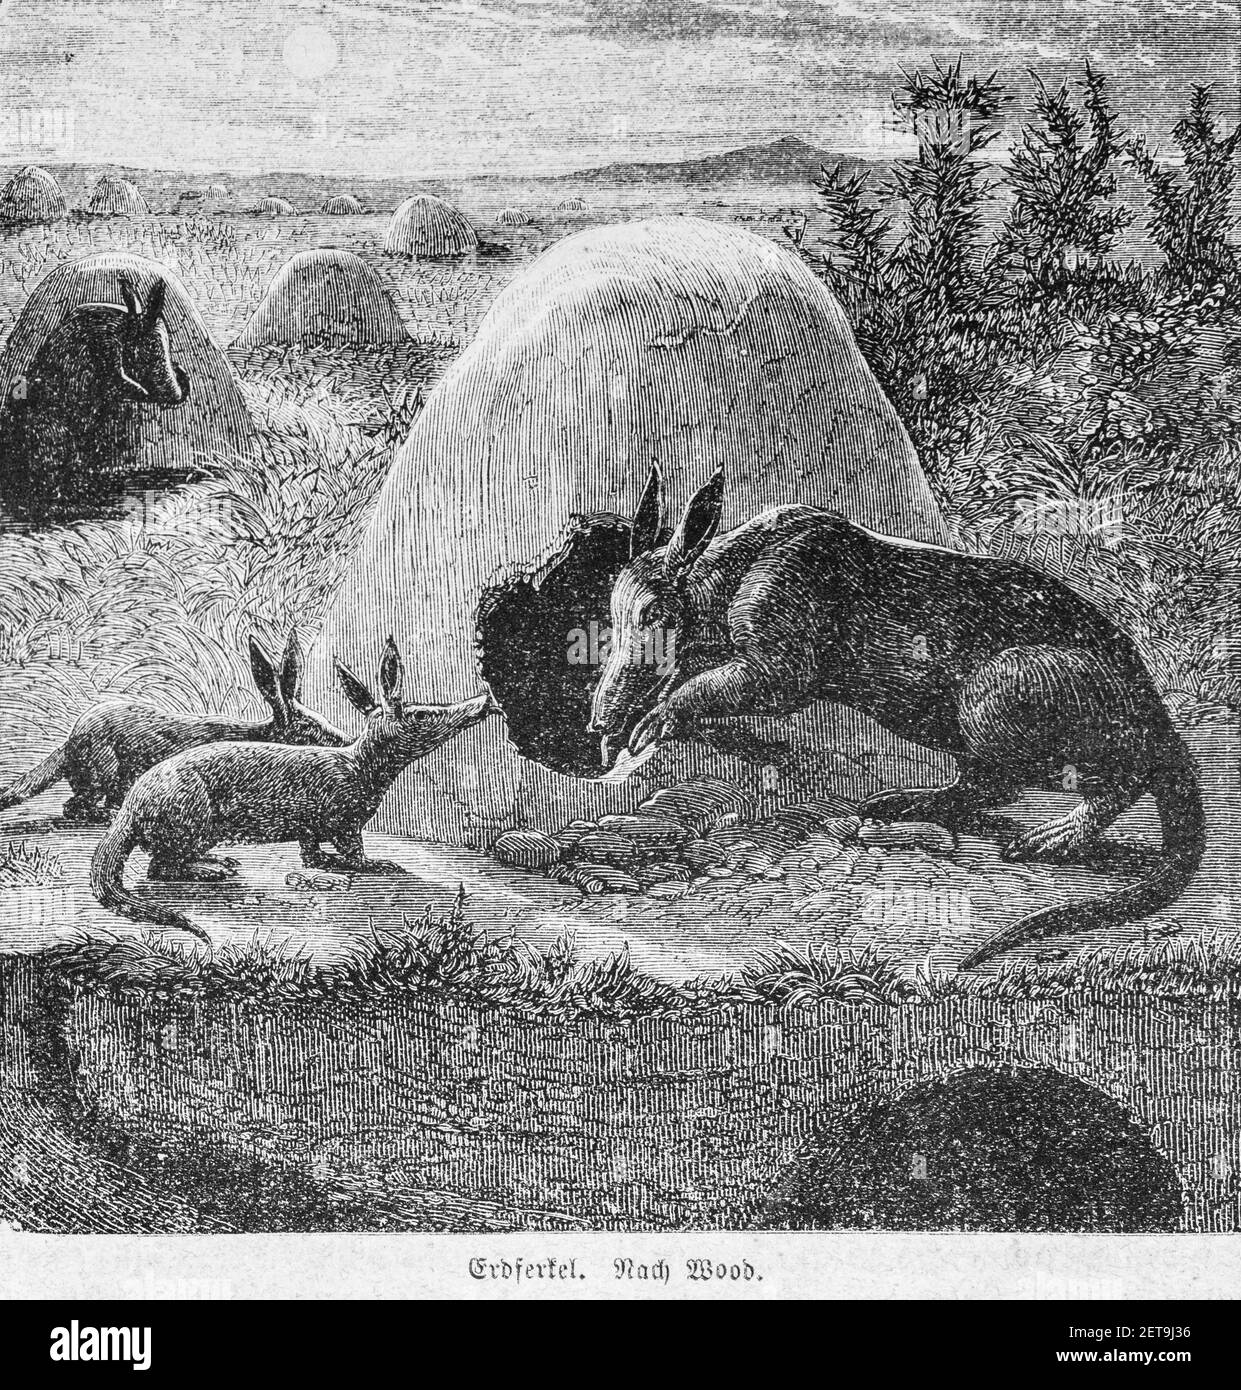 Aardvarks ou Antarrs (Orycteropus afer), Abyssina, Ethiopie, Afrique de l'est, Dr. Richard Angree, Abessinien, Land und Volk, Leipzig 1869 Banque D'Images